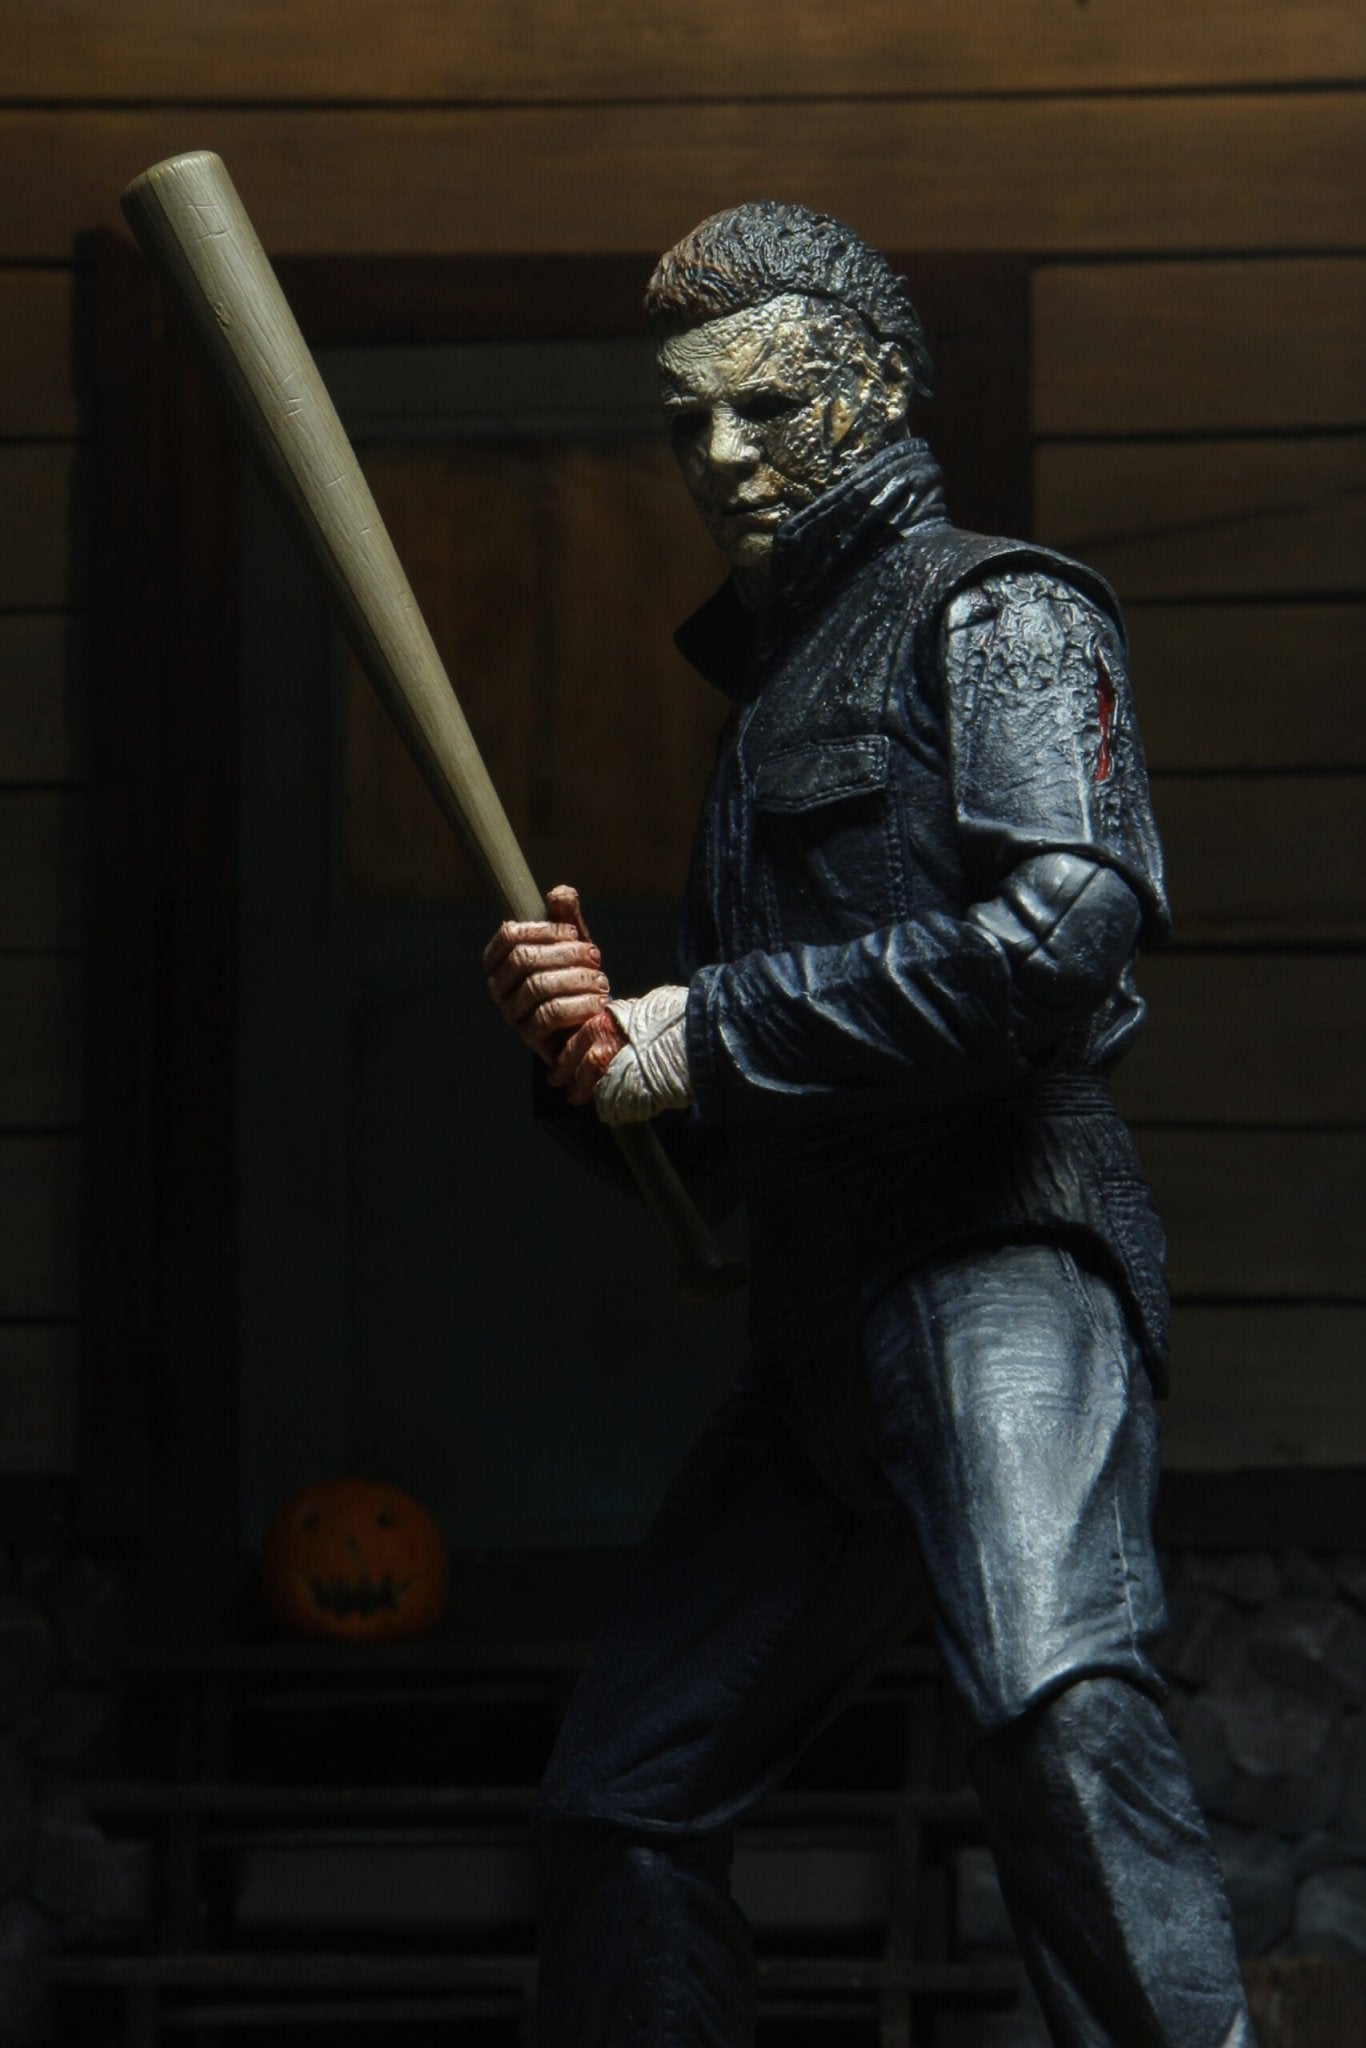 NECA Halloween Kills (Ultimate Michael Myers) 634482606445 - King Card Canada